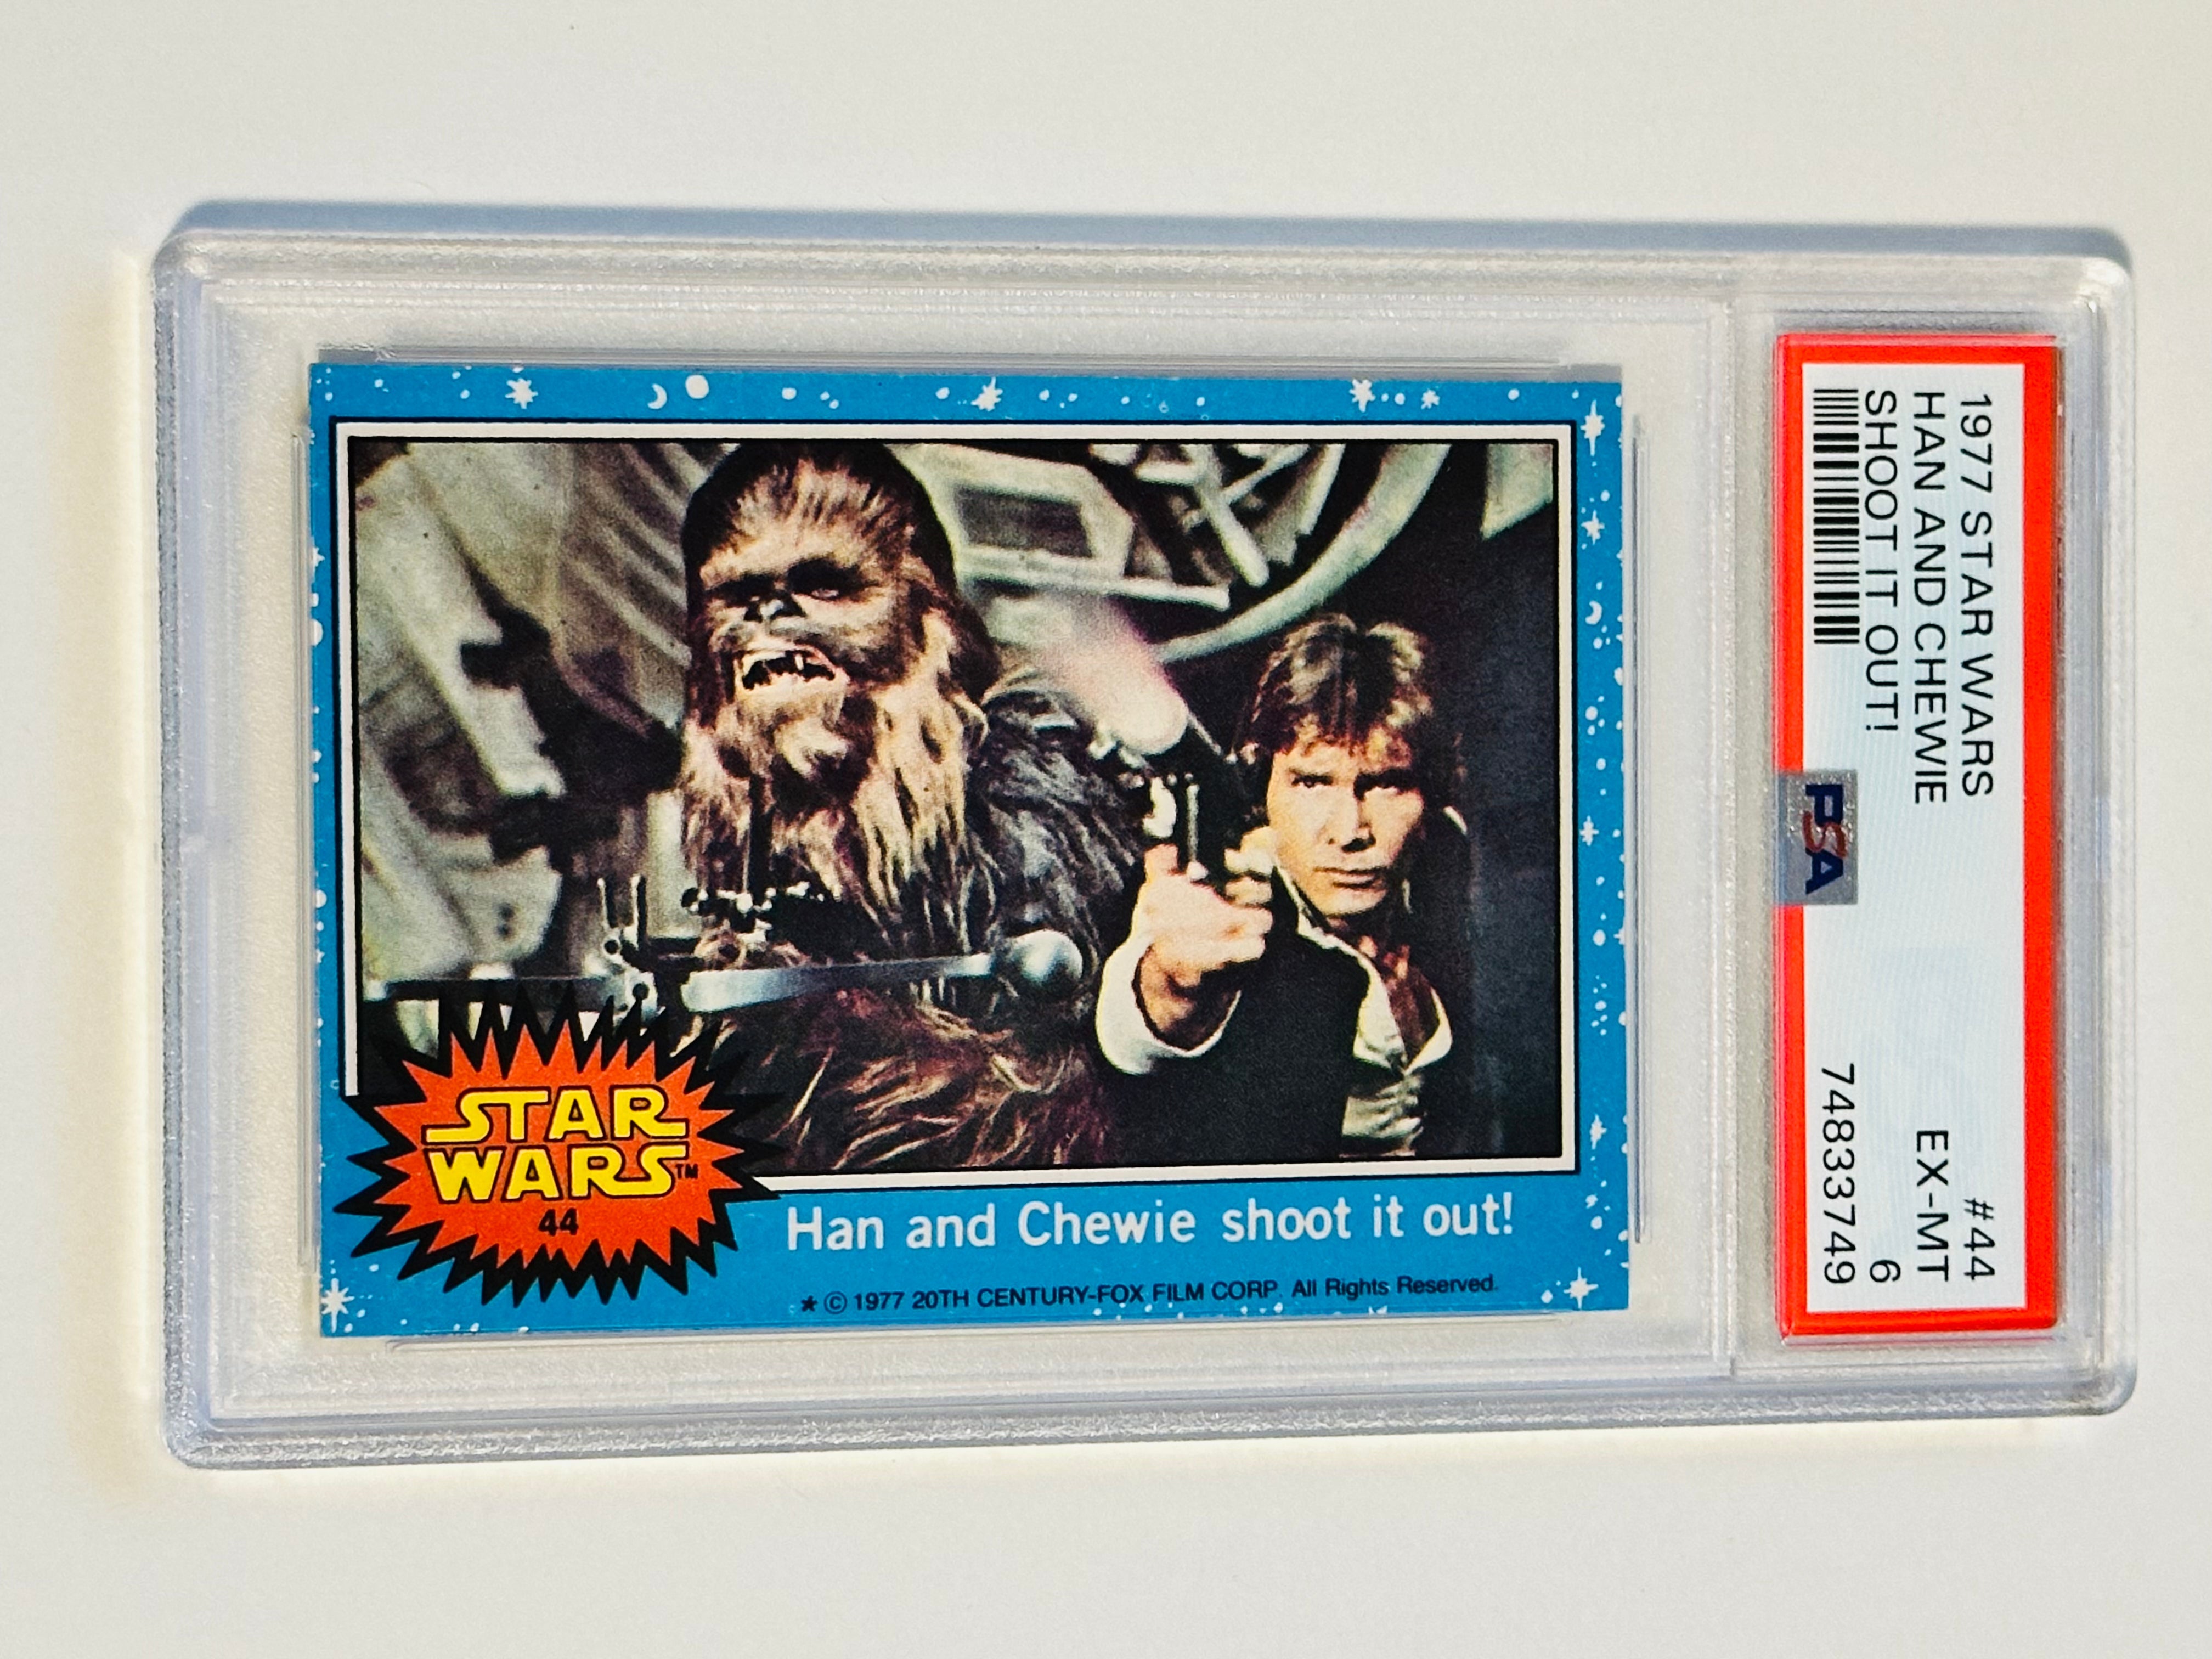 Star Wars #44 high grade PSA 6 card from 1977